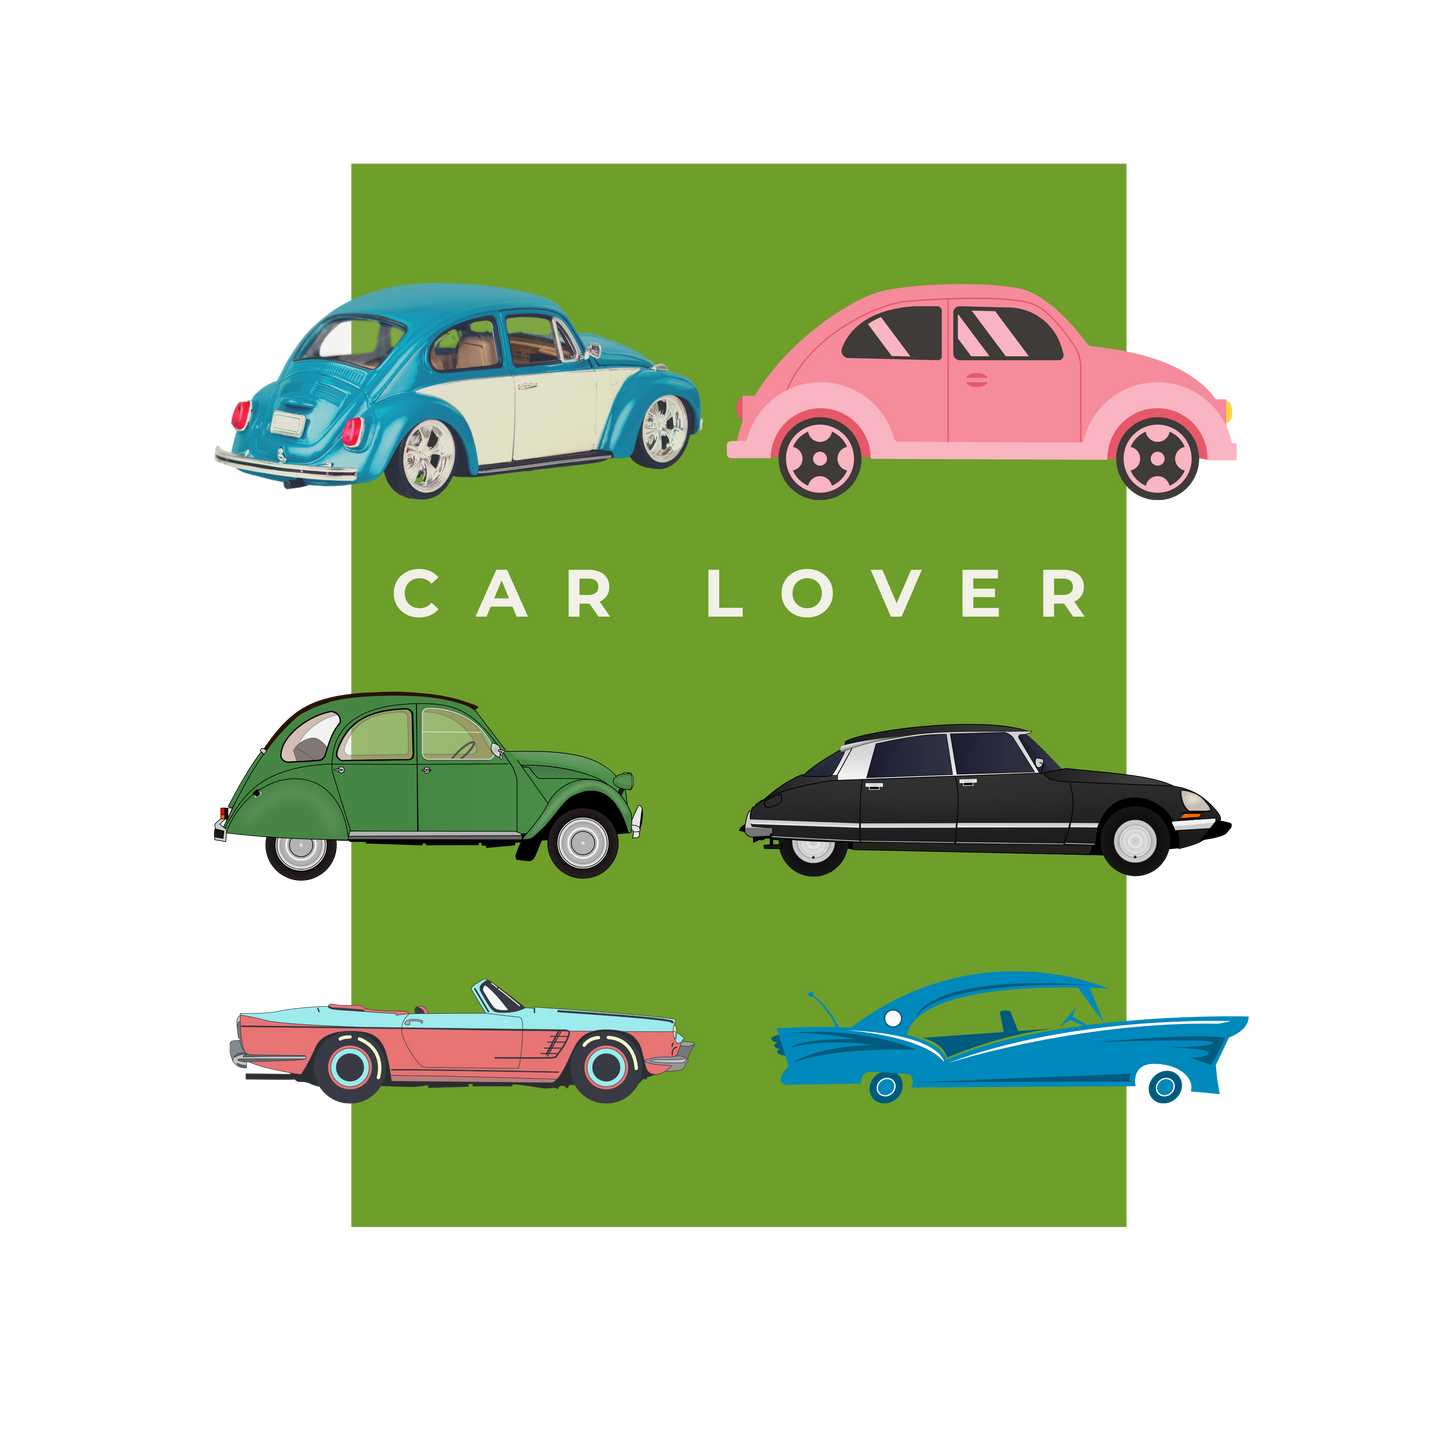 Car lover